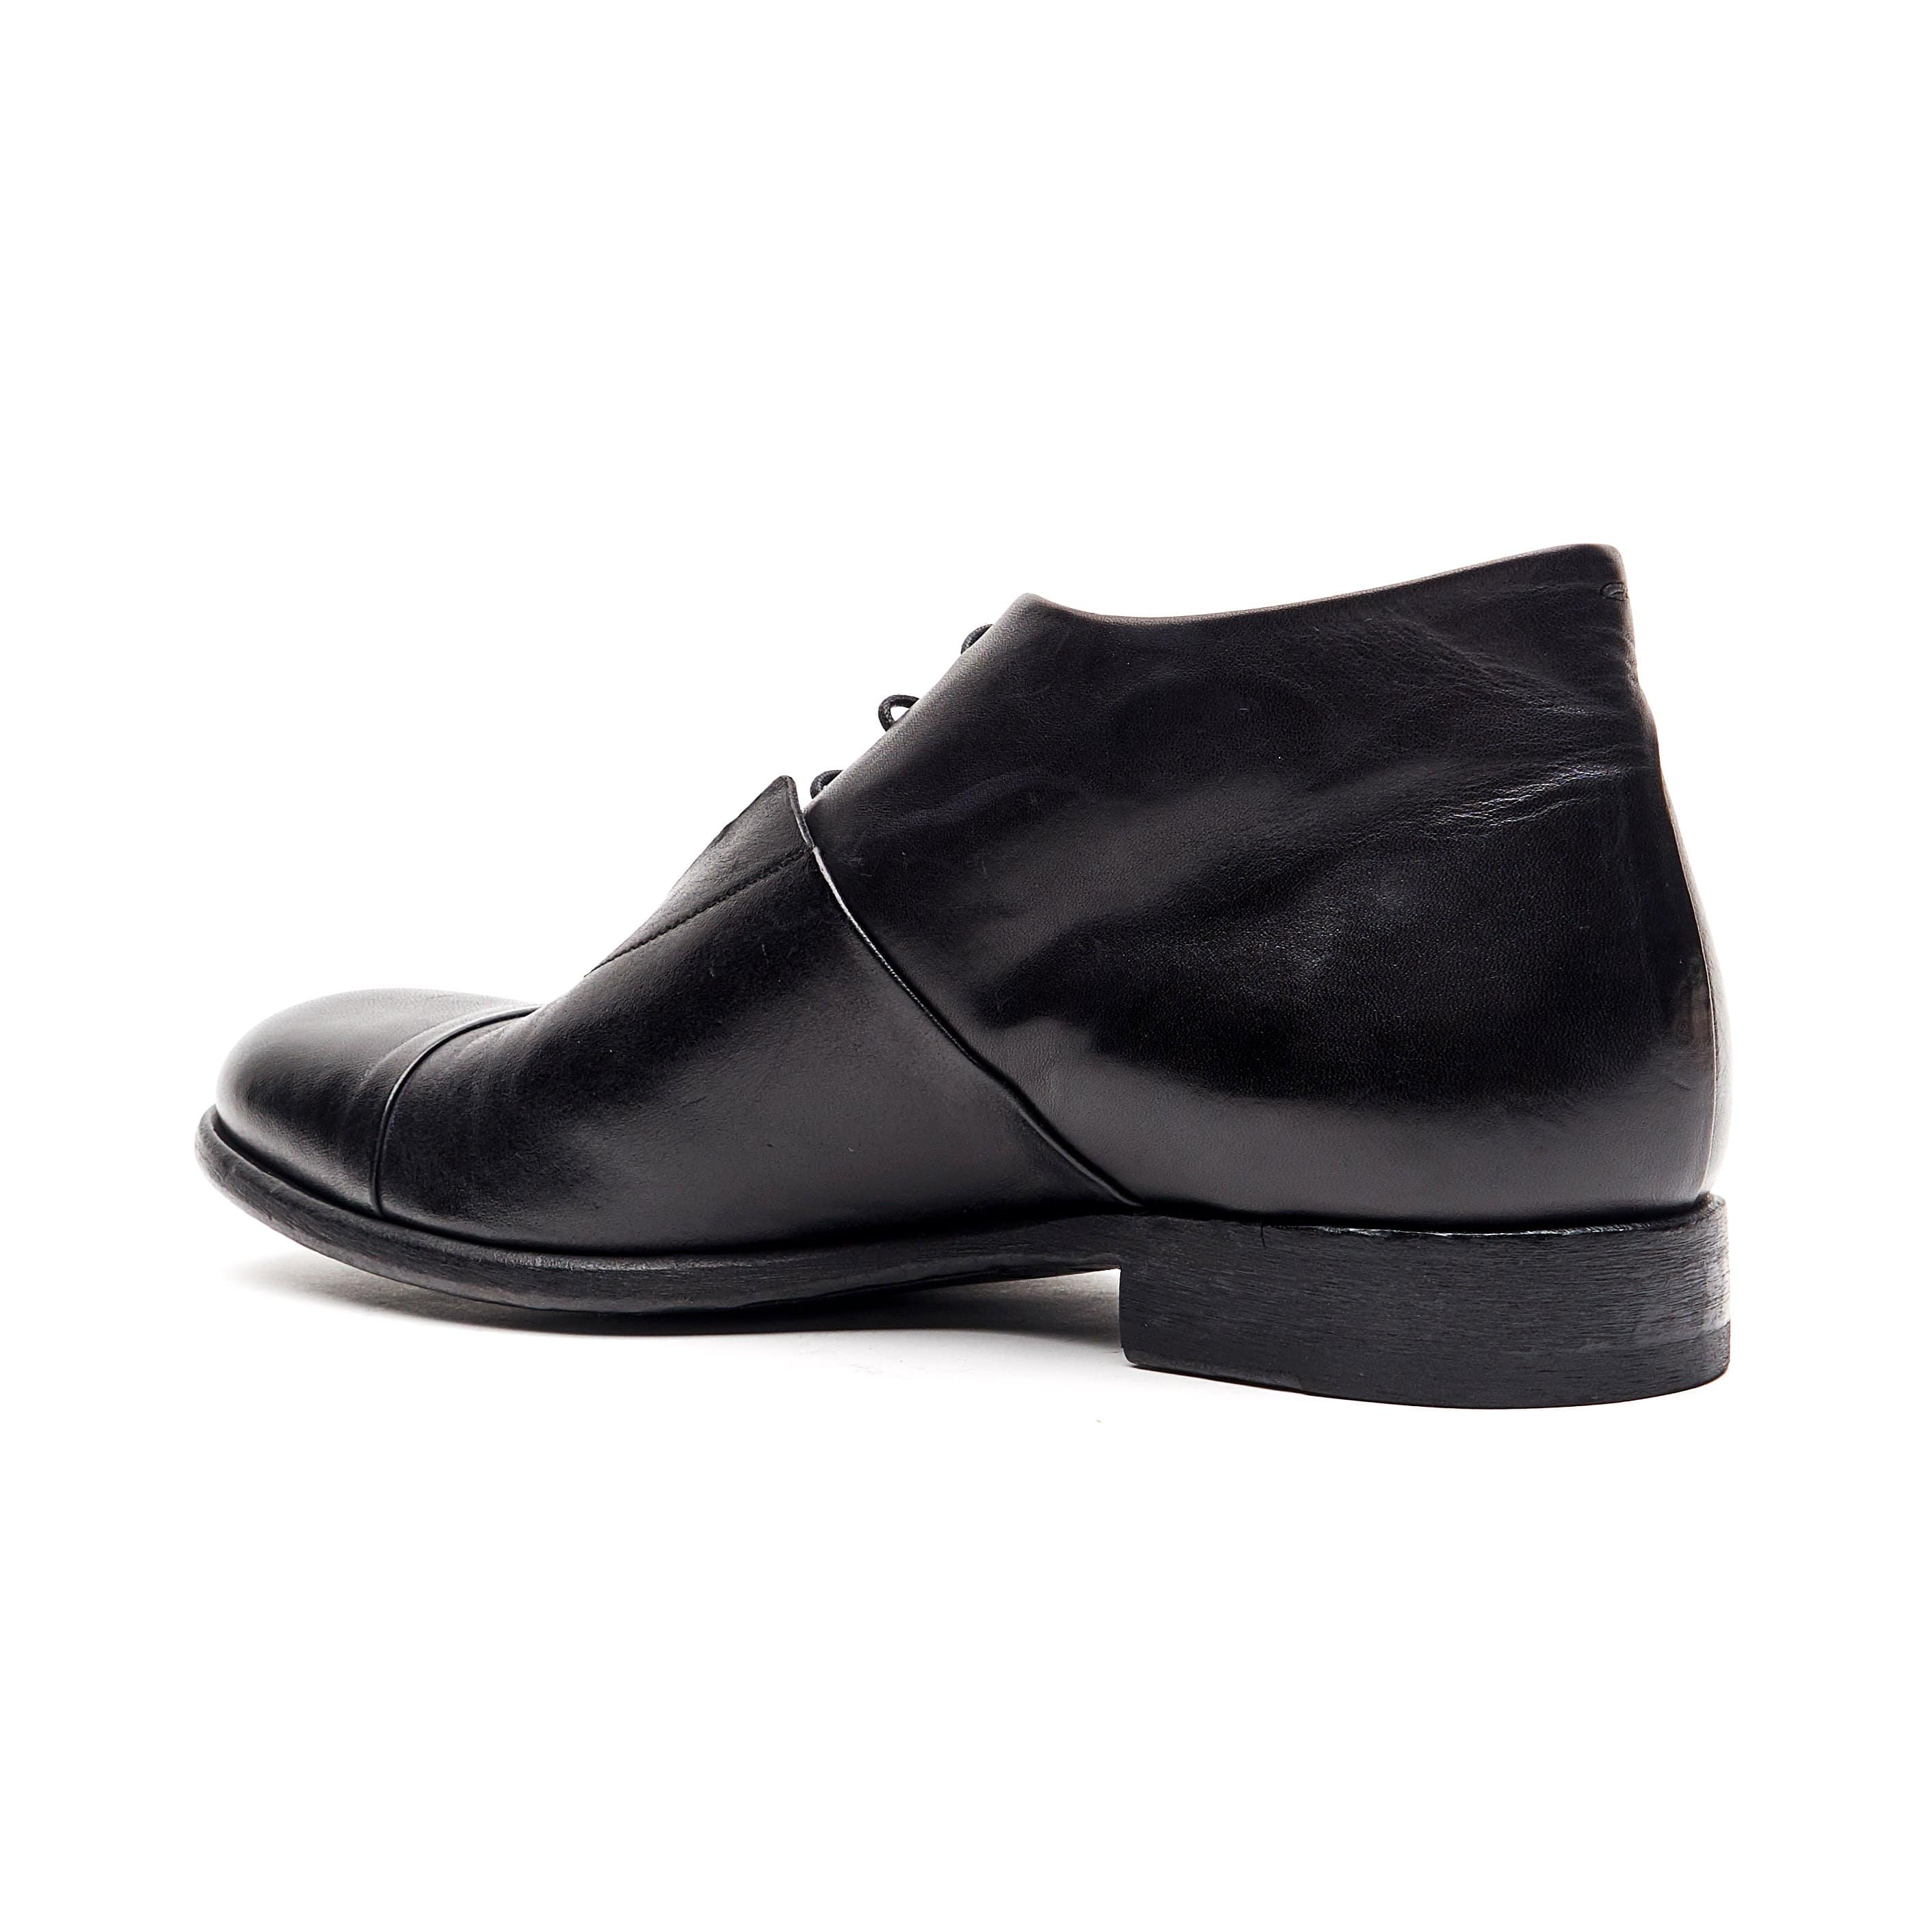 Pantanetti 10922 Black chukkas - 124 Shoes